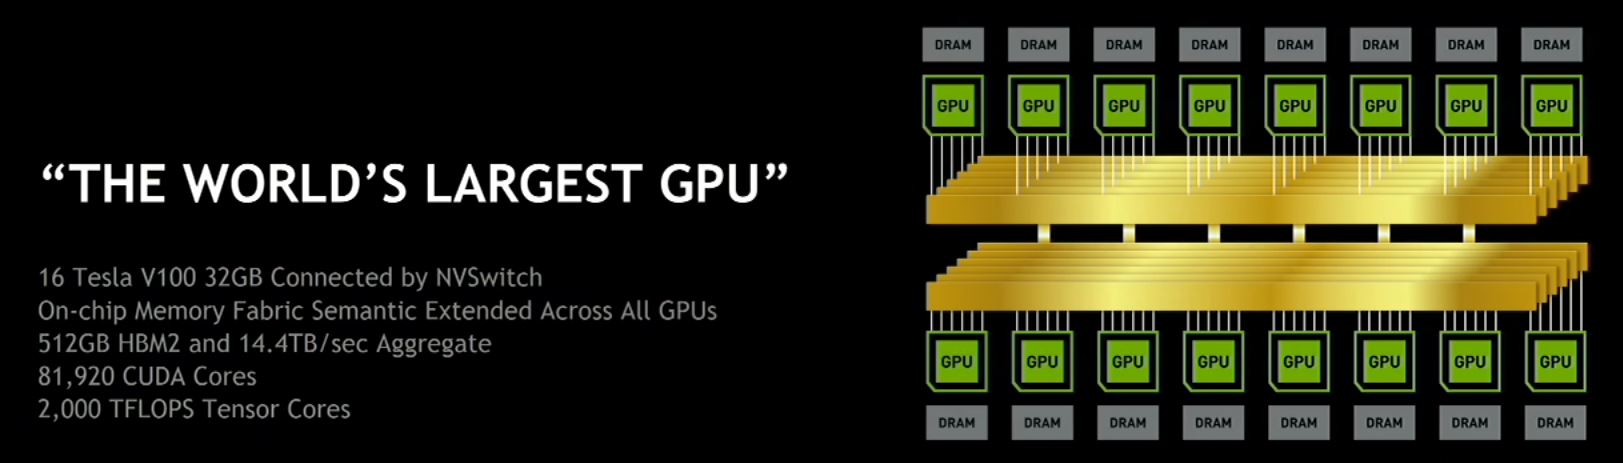 NVIDIA announces world's largest GPU 